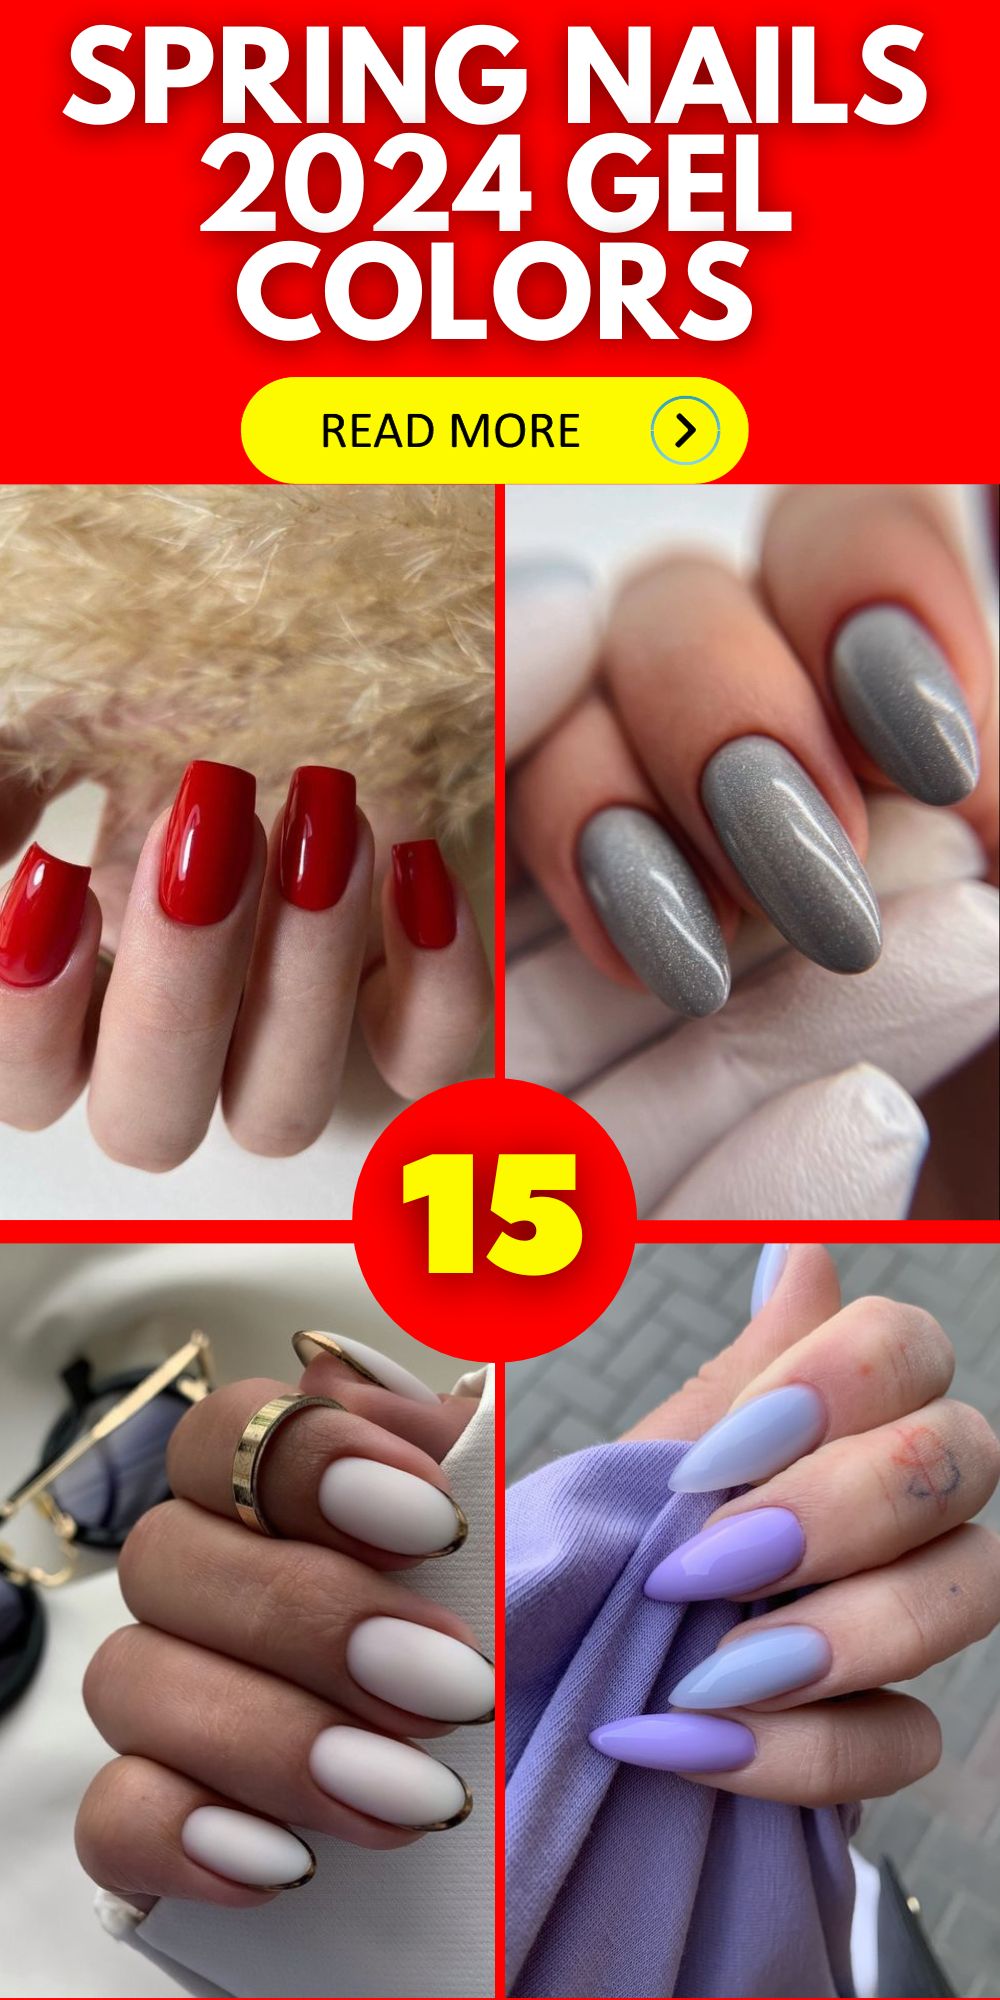 Explore Spring Nails 2024 Trending Gel Colors & Chic Manicure Designs